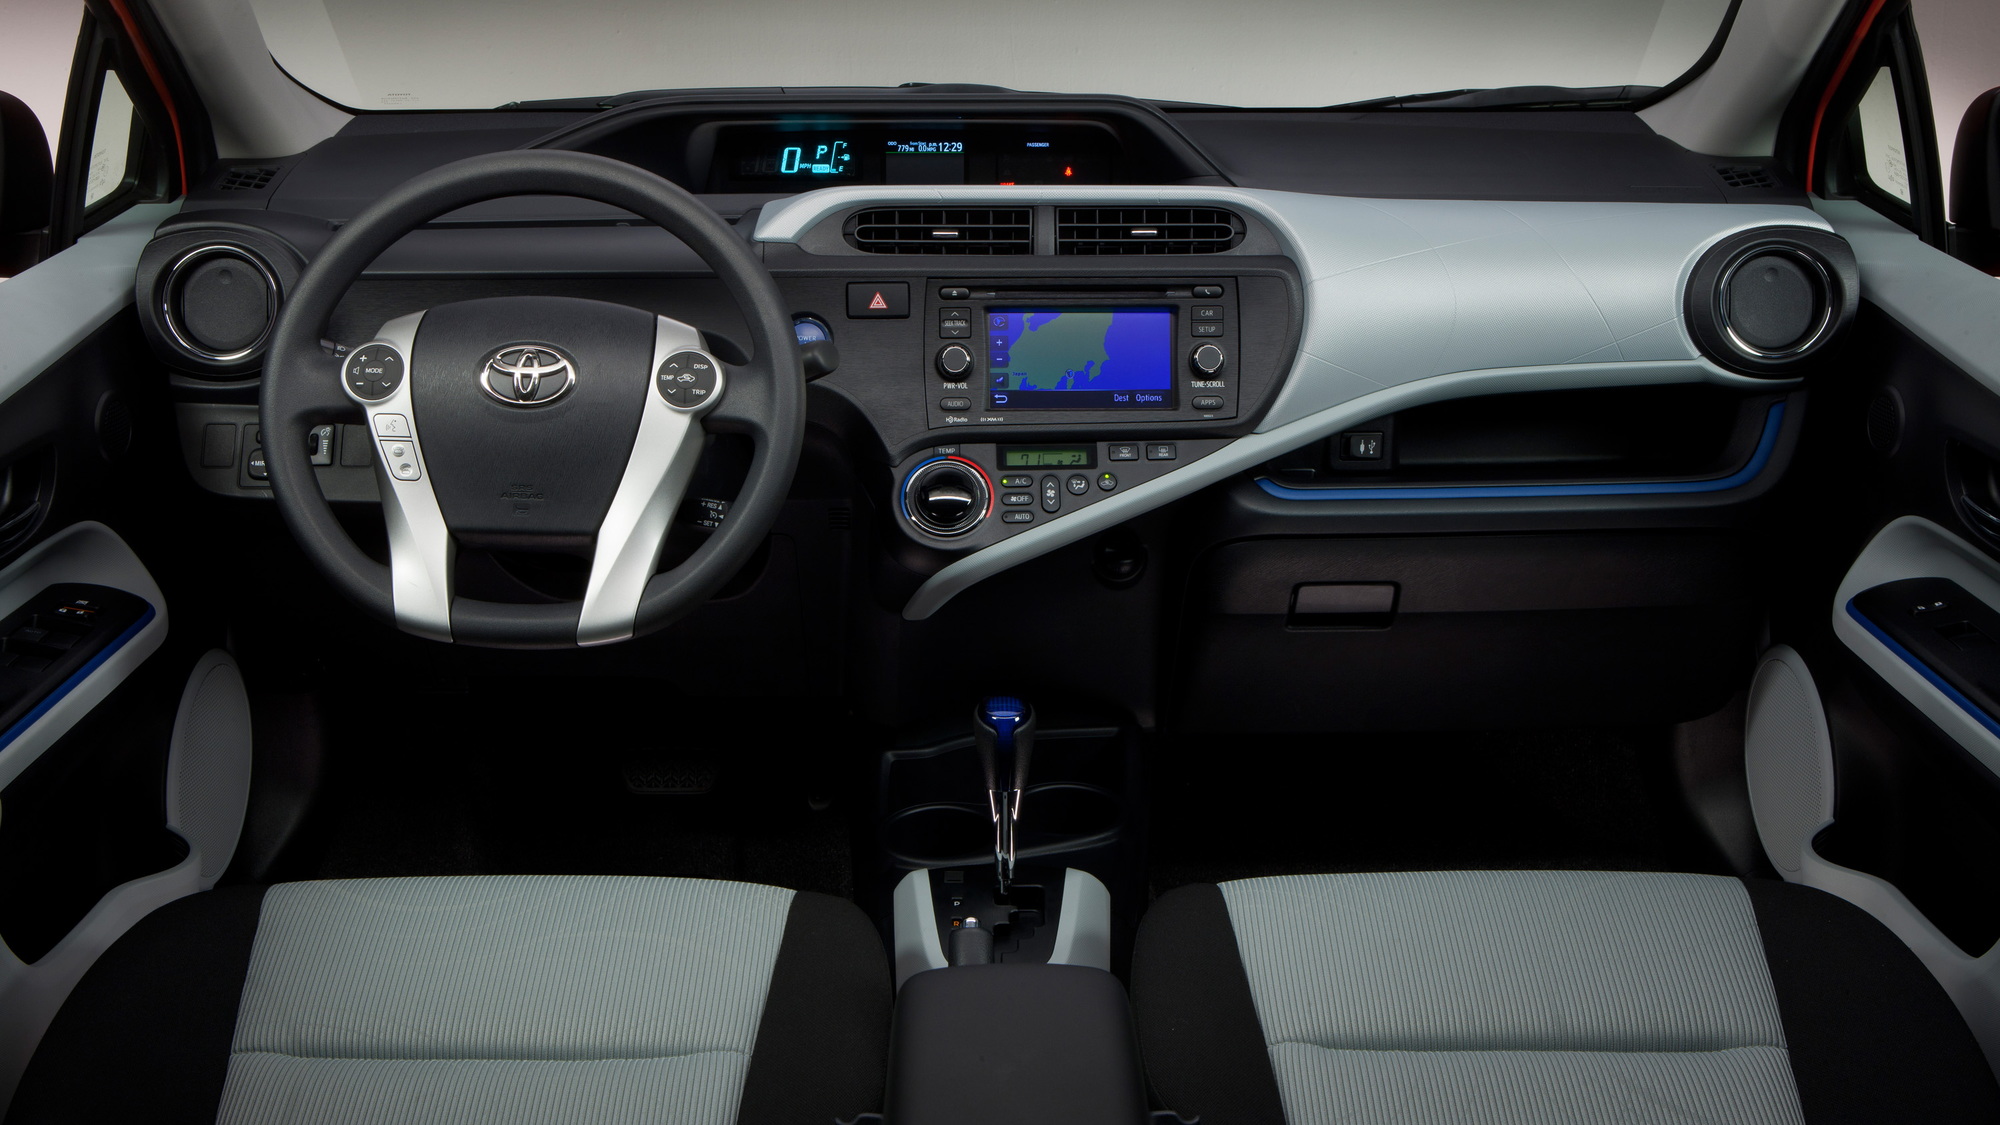 2012 Toyota Prius C, as shown at 2011 Tokyo Motor Show